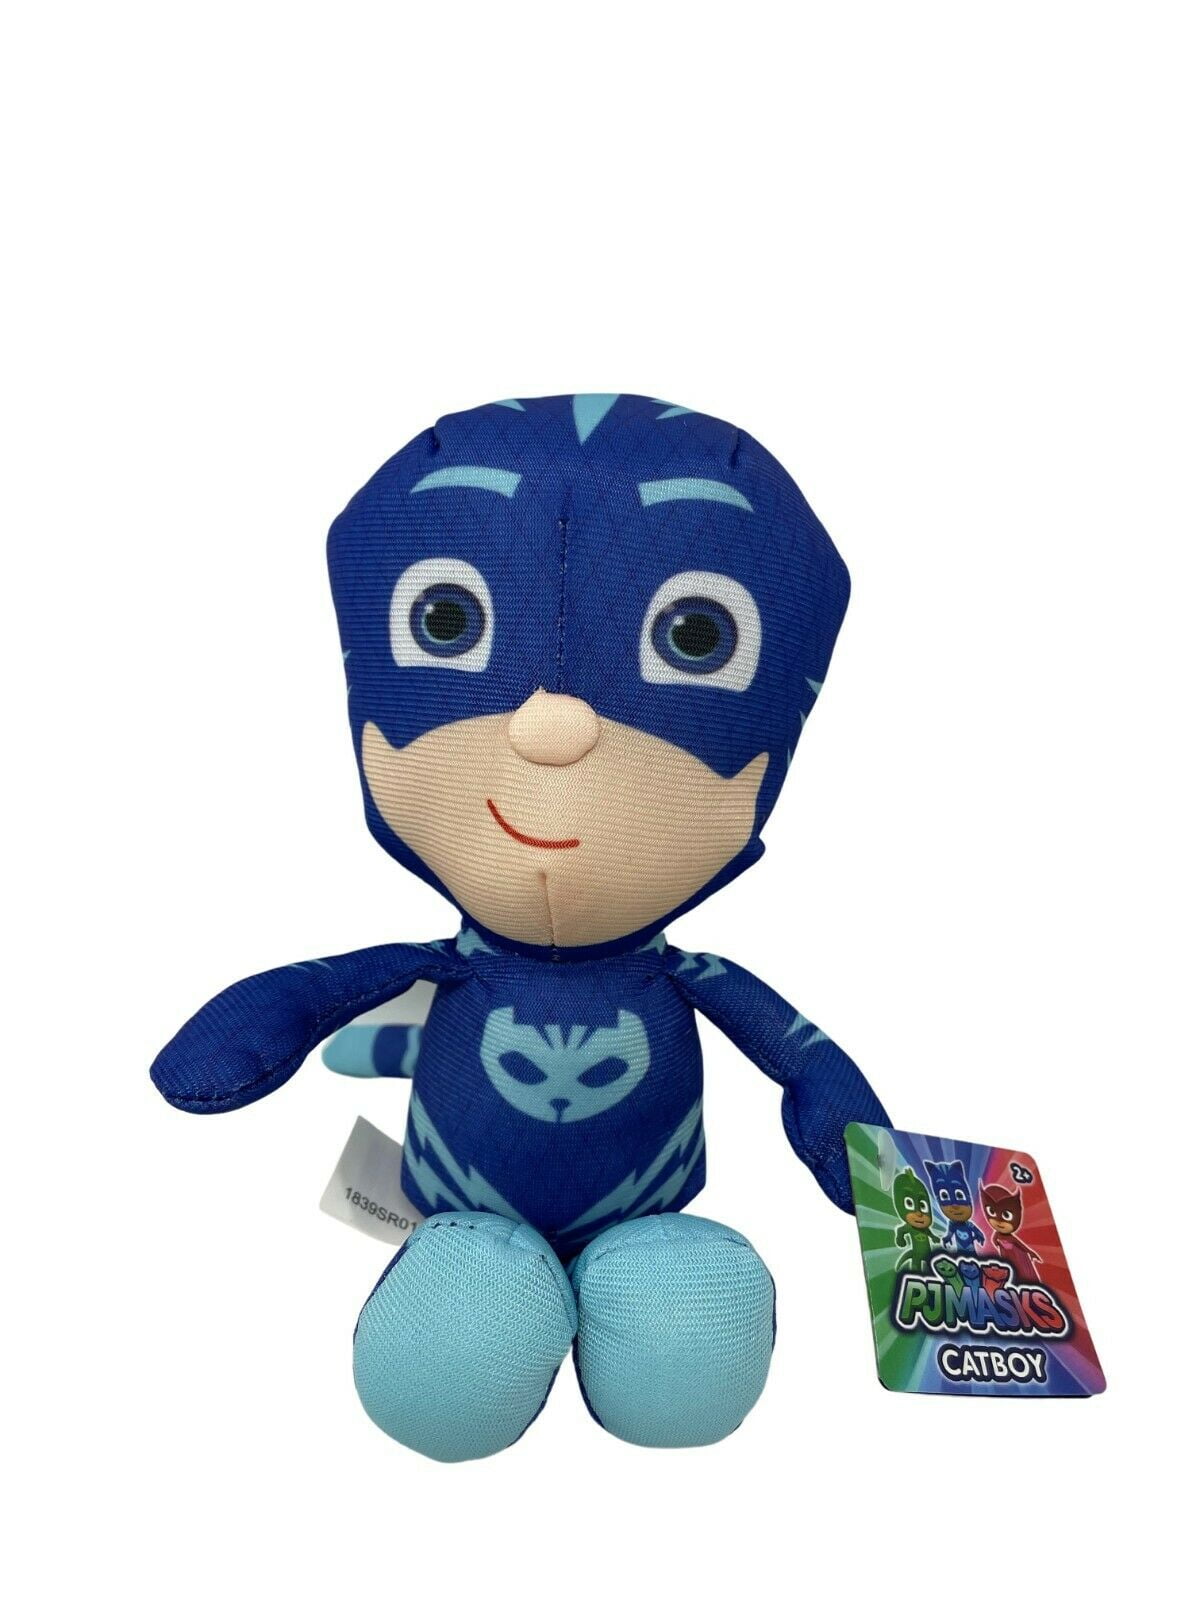 ONLY! Plush Super Soft Cuddly Child Gift Xmas Just Play PJ Masks Bean Catboy 